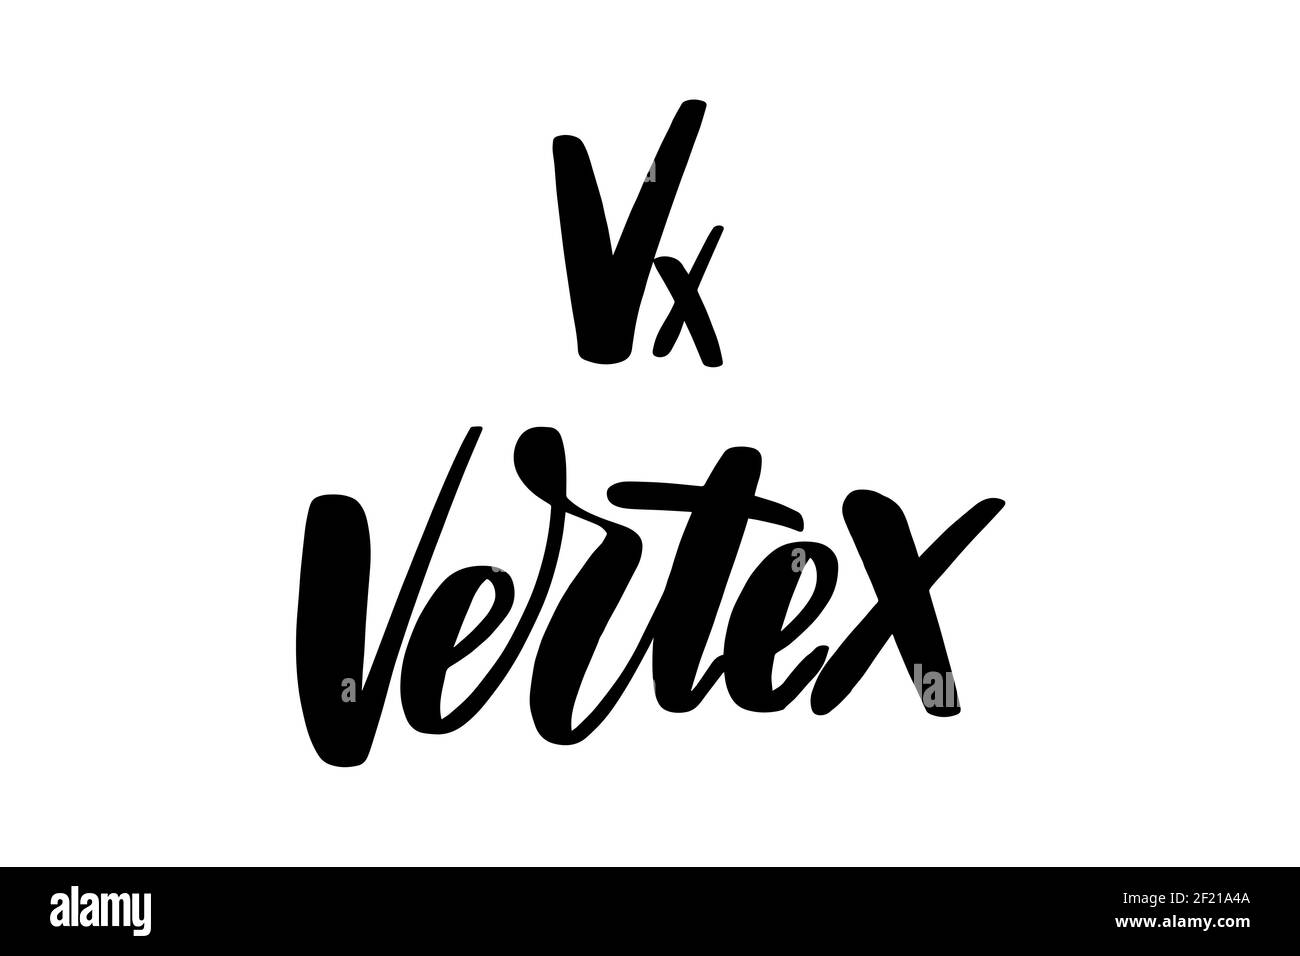 Vertex. Black ink handwriting. Astrology natal birth chart symbol.  Stock Vector